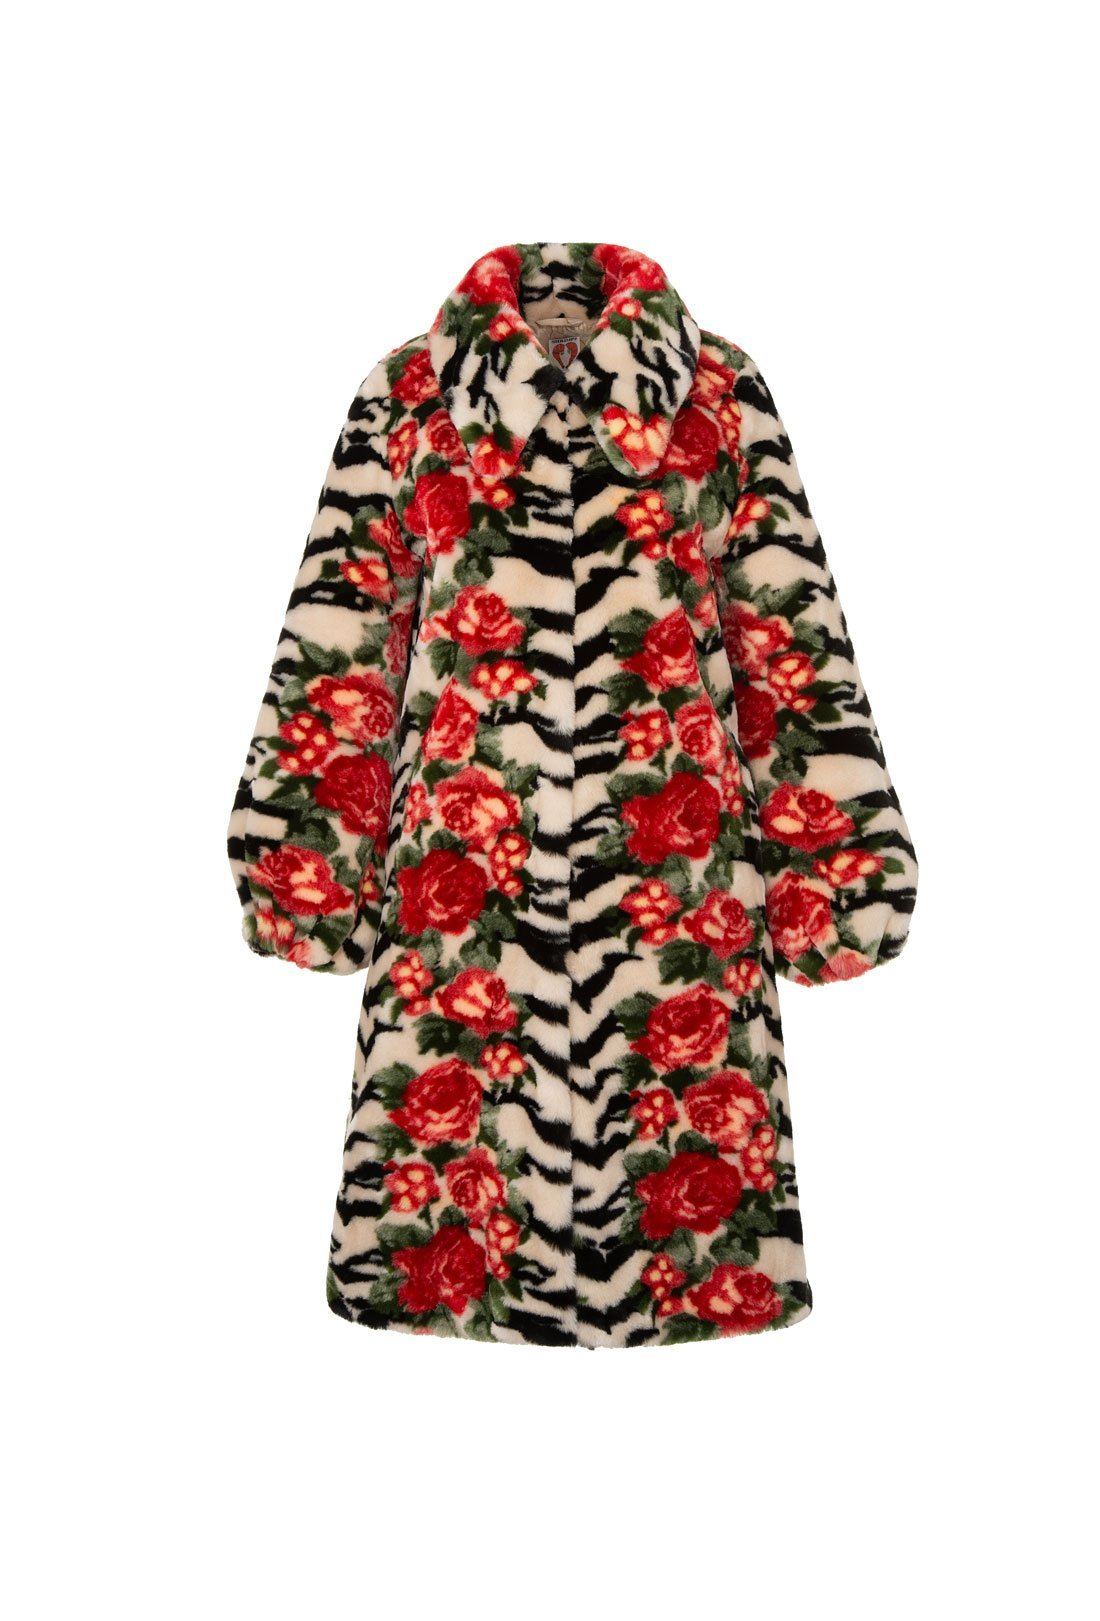 Women's Faux Fur Coat - Lorca in Tiger Rose Print Jacquard - Shrimps ...